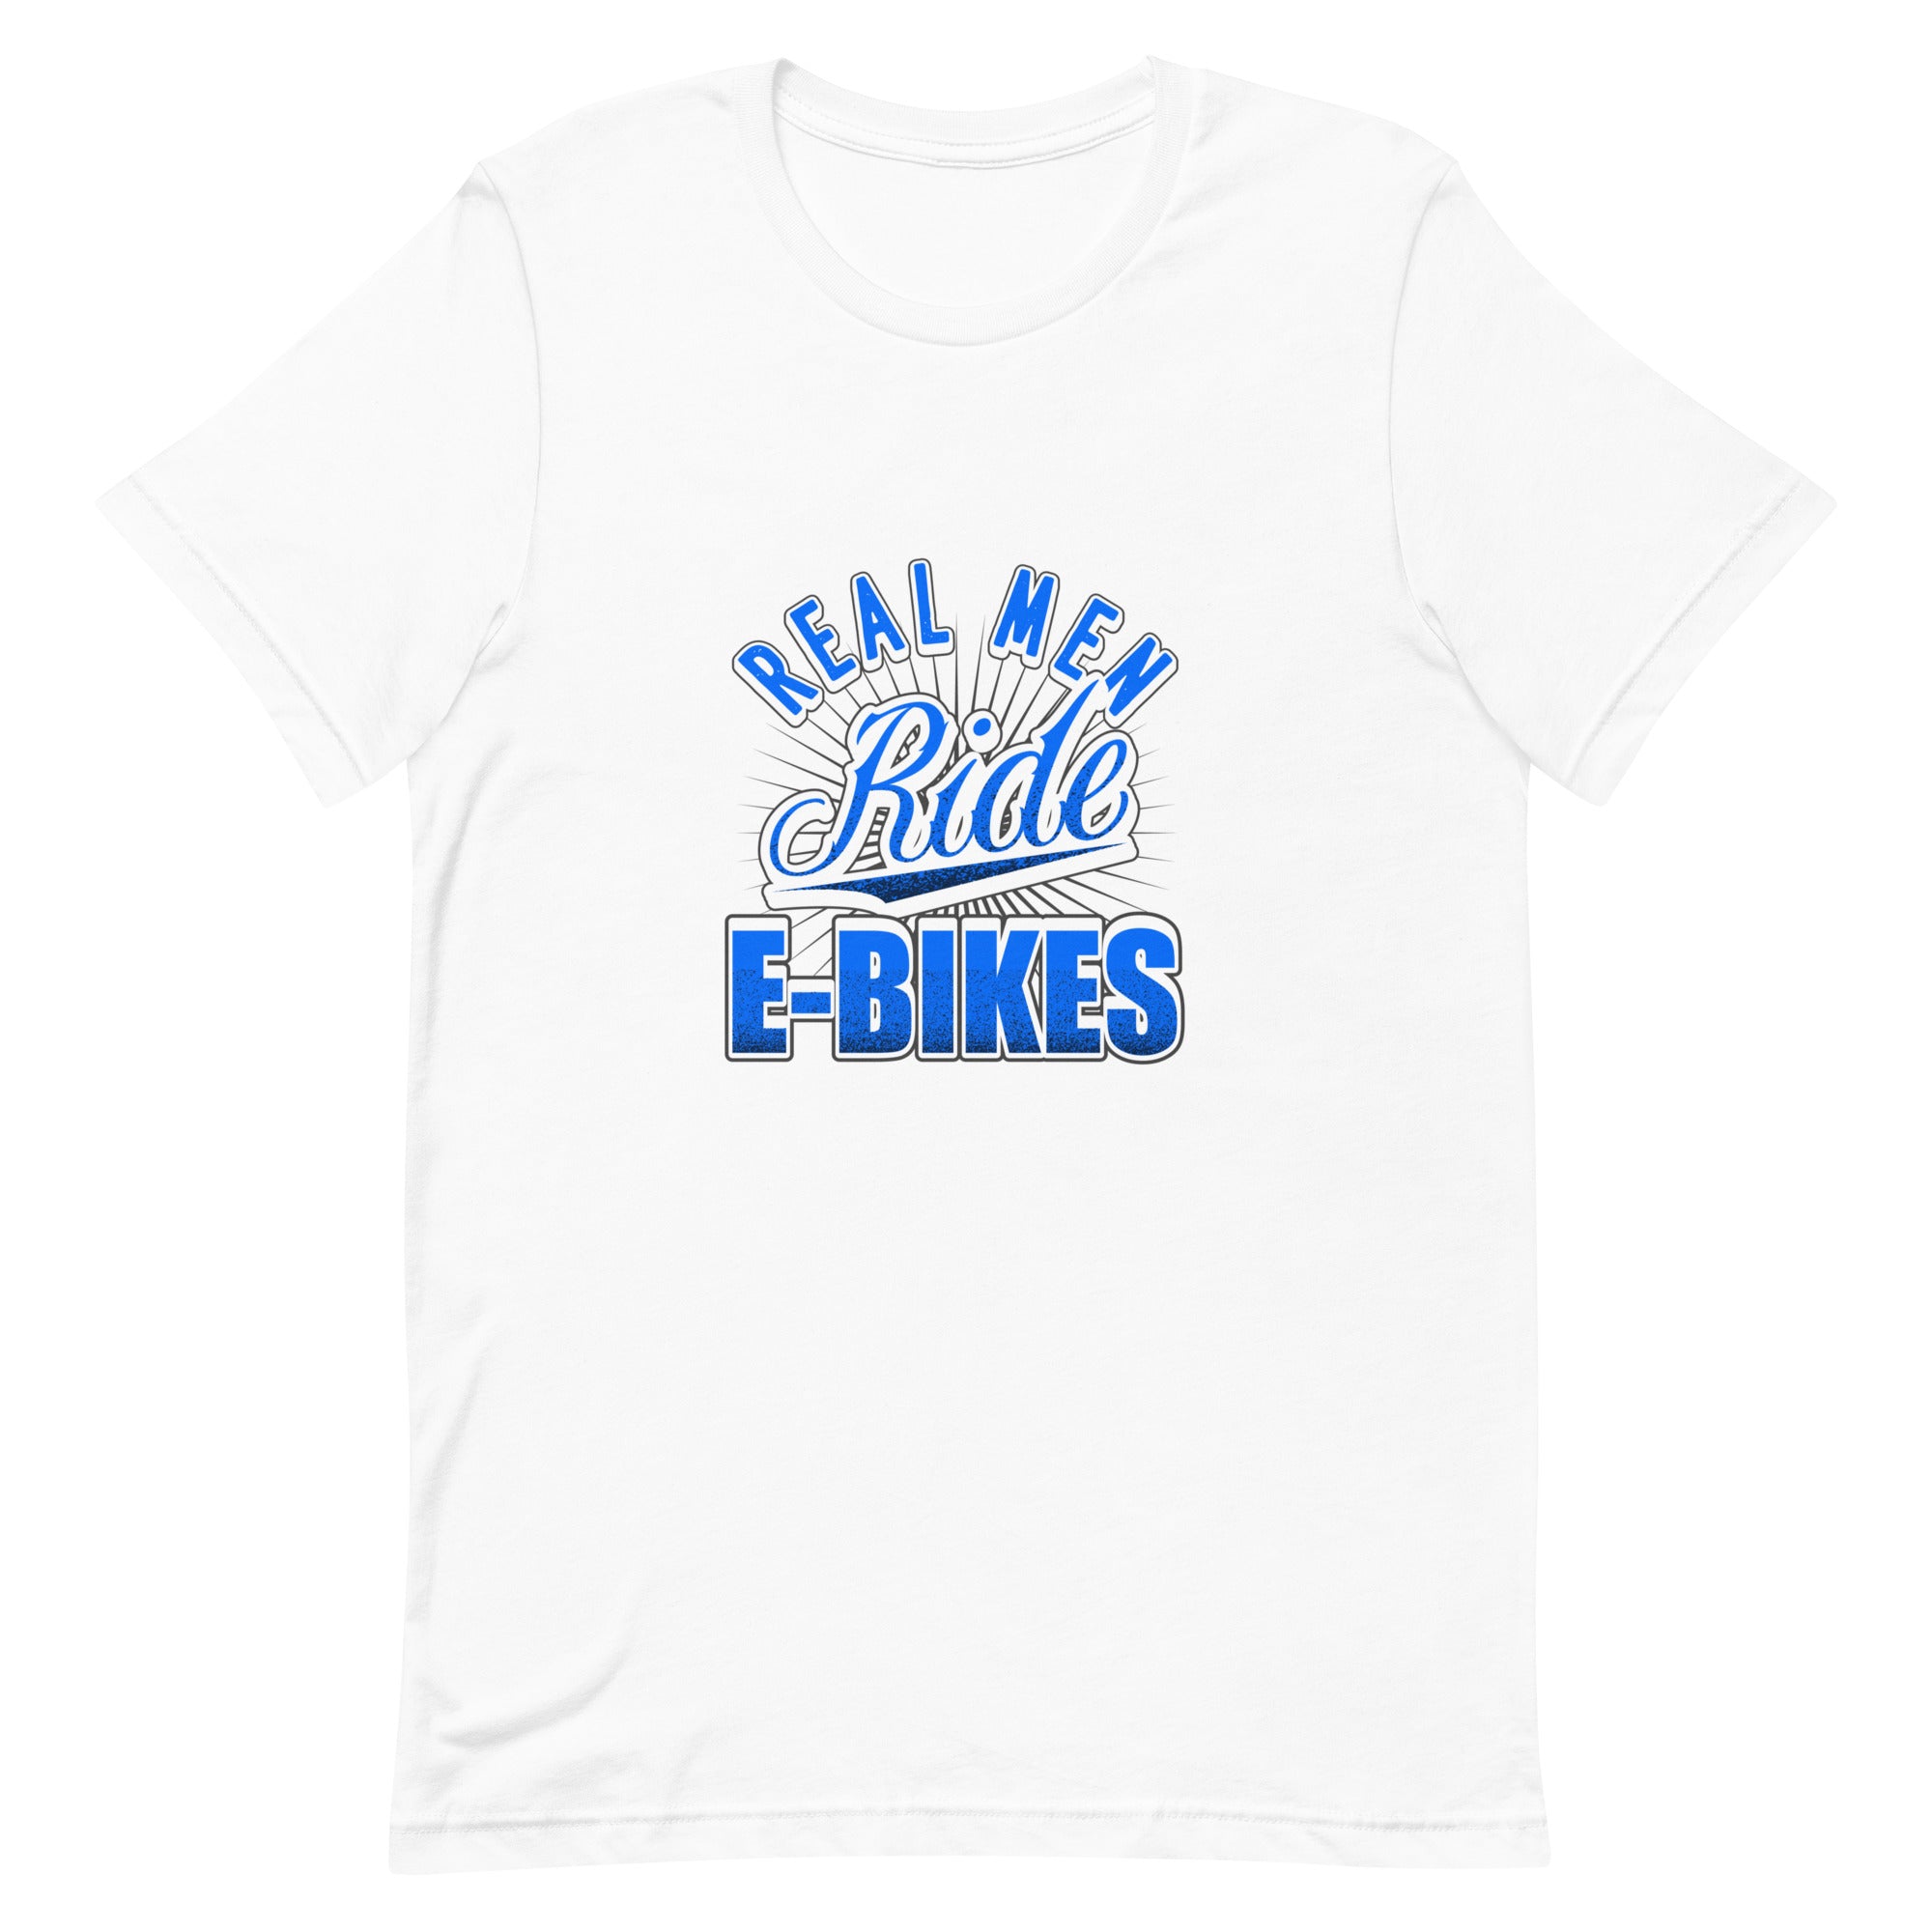 Real Men Ride E-bikes Bella + Canvas 3001 Women's T-shirt White